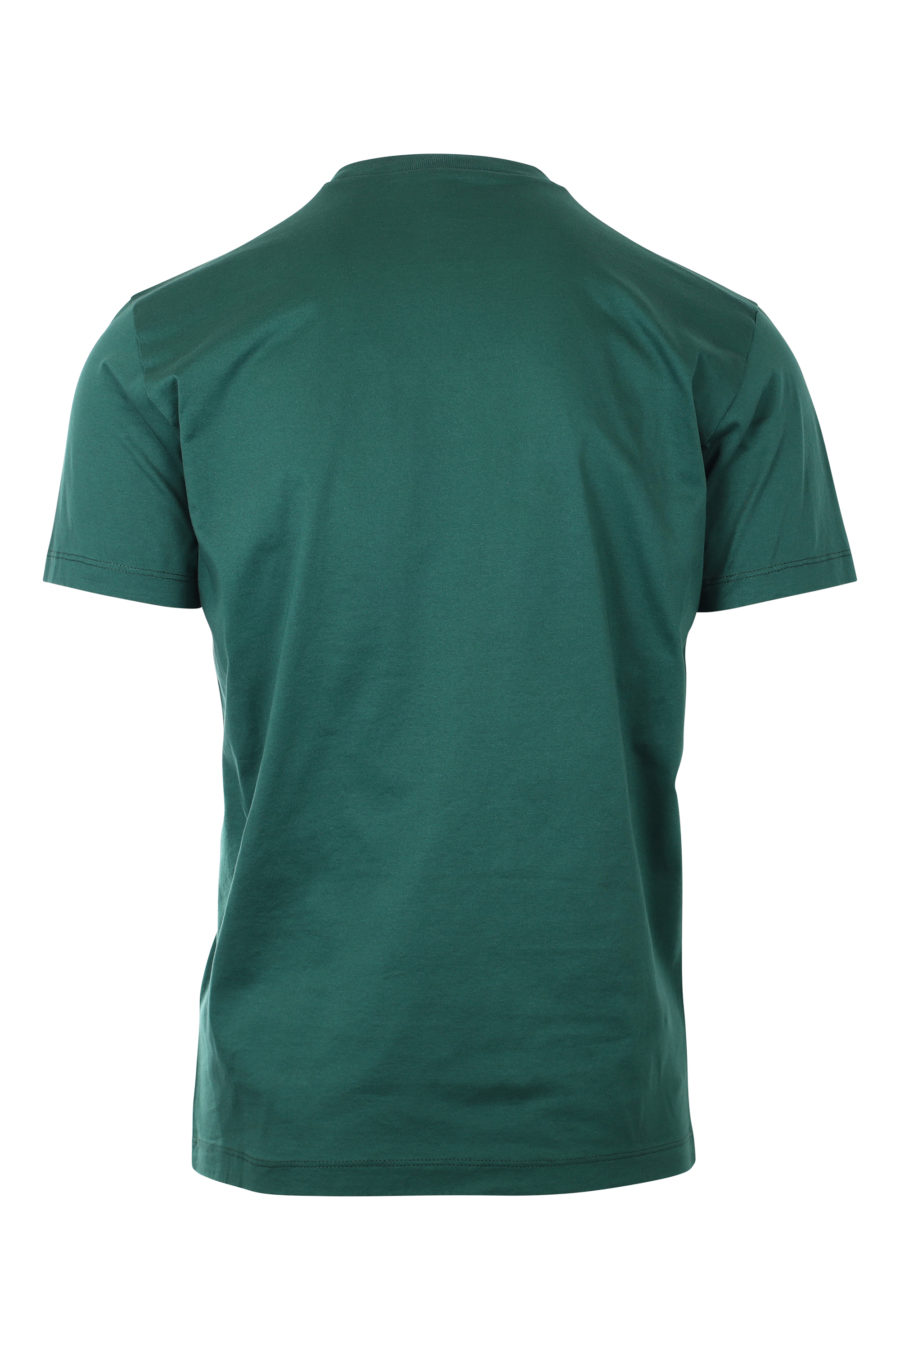 Camiseta verde con logo "icon" - IMG 9744